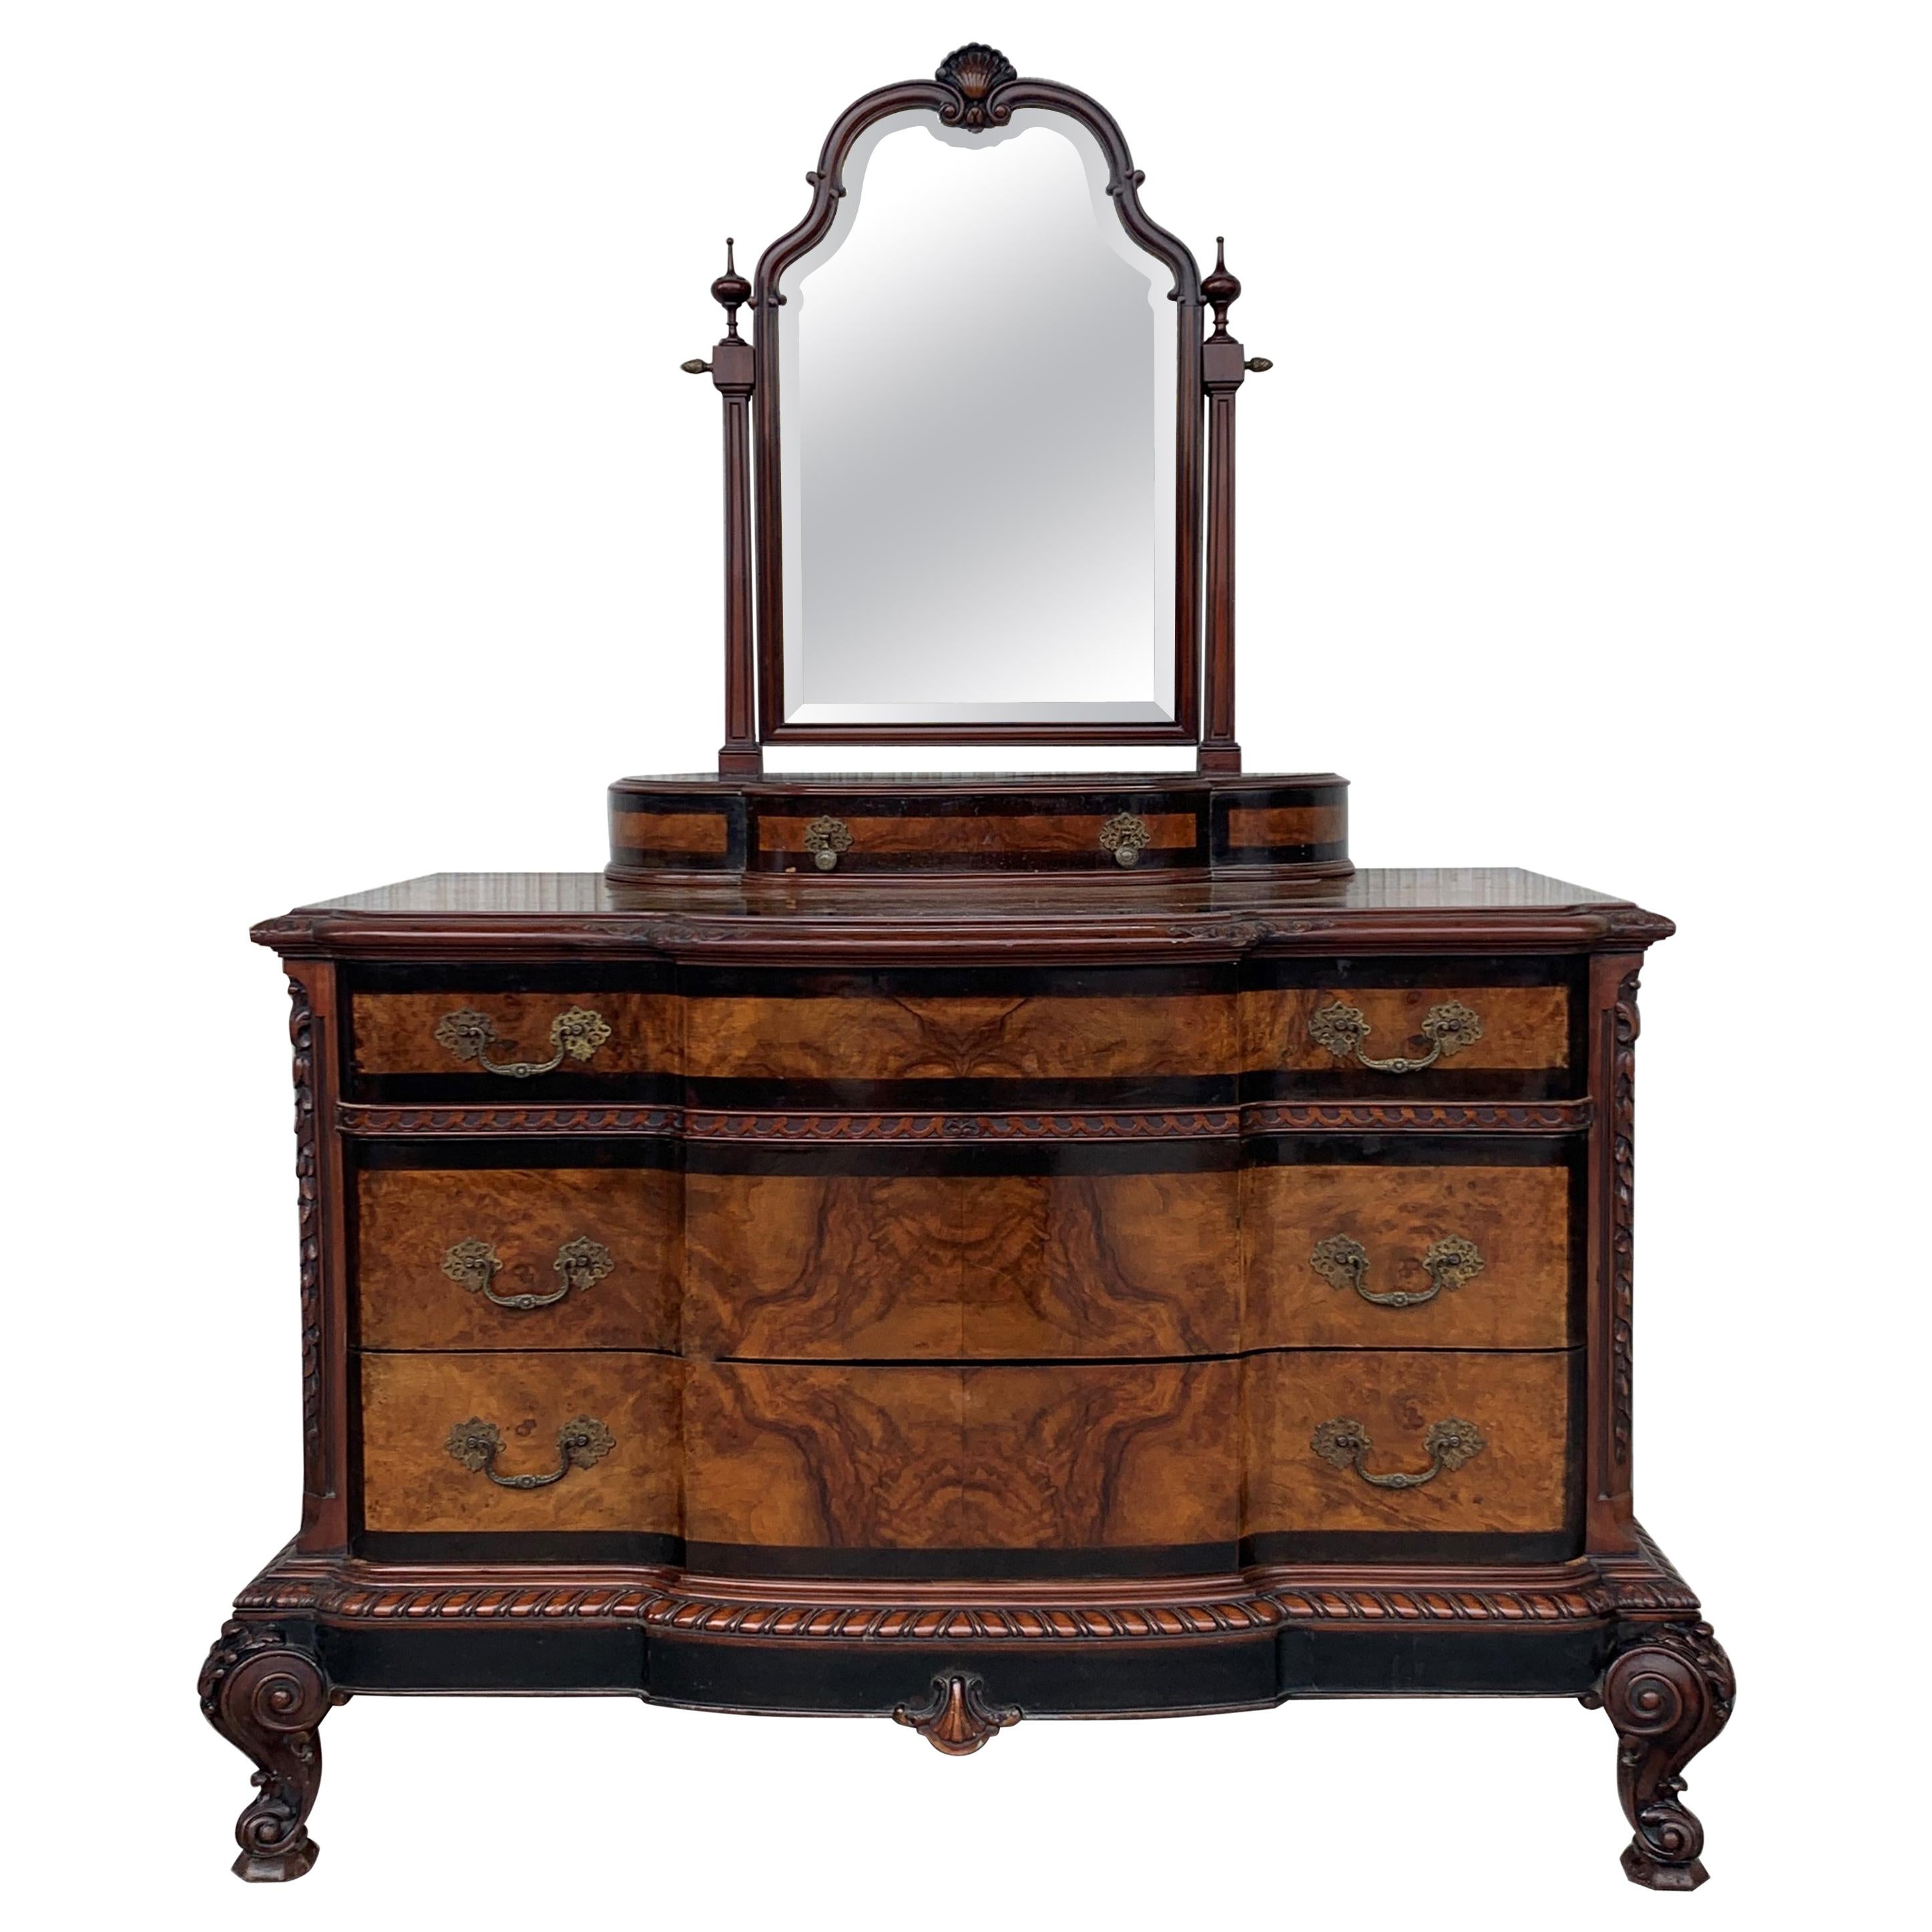 1900s Venetian Baroque Dresser with mirror in Burl Walnut with Ebonized Details For Sale